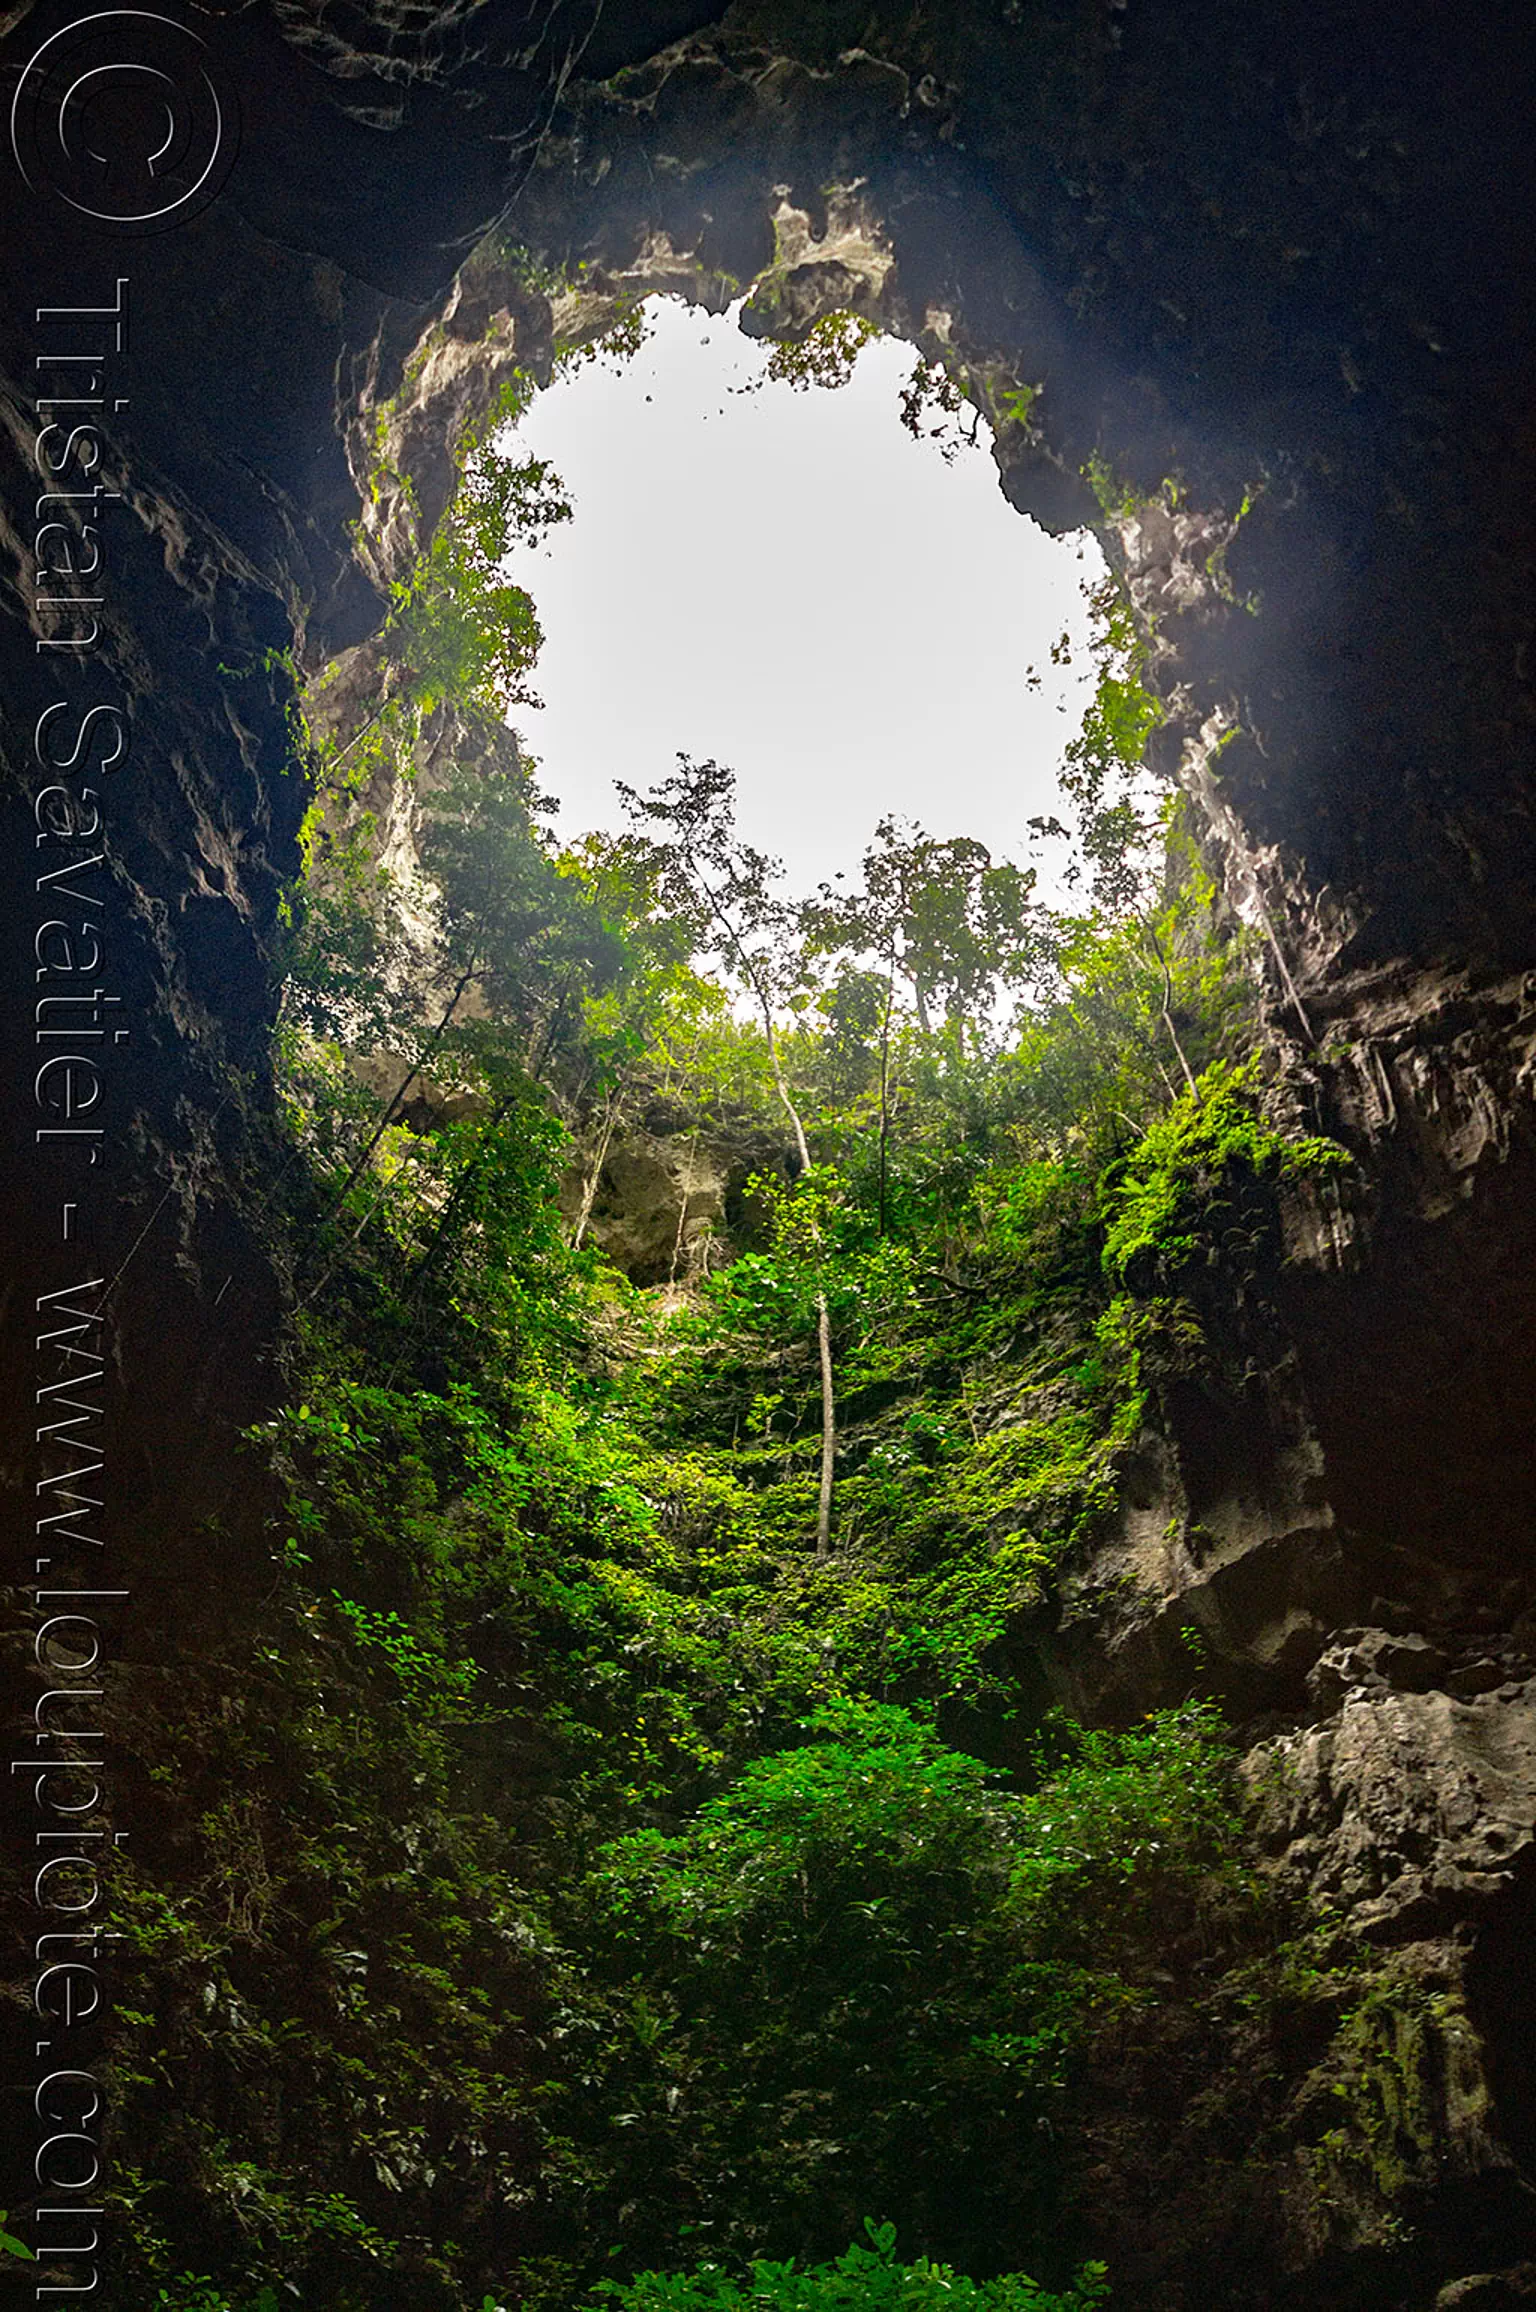 callao cave - natural cave near tuguegarao (philippines), caving, natural cave, philippines, spelunking, tuguegarao